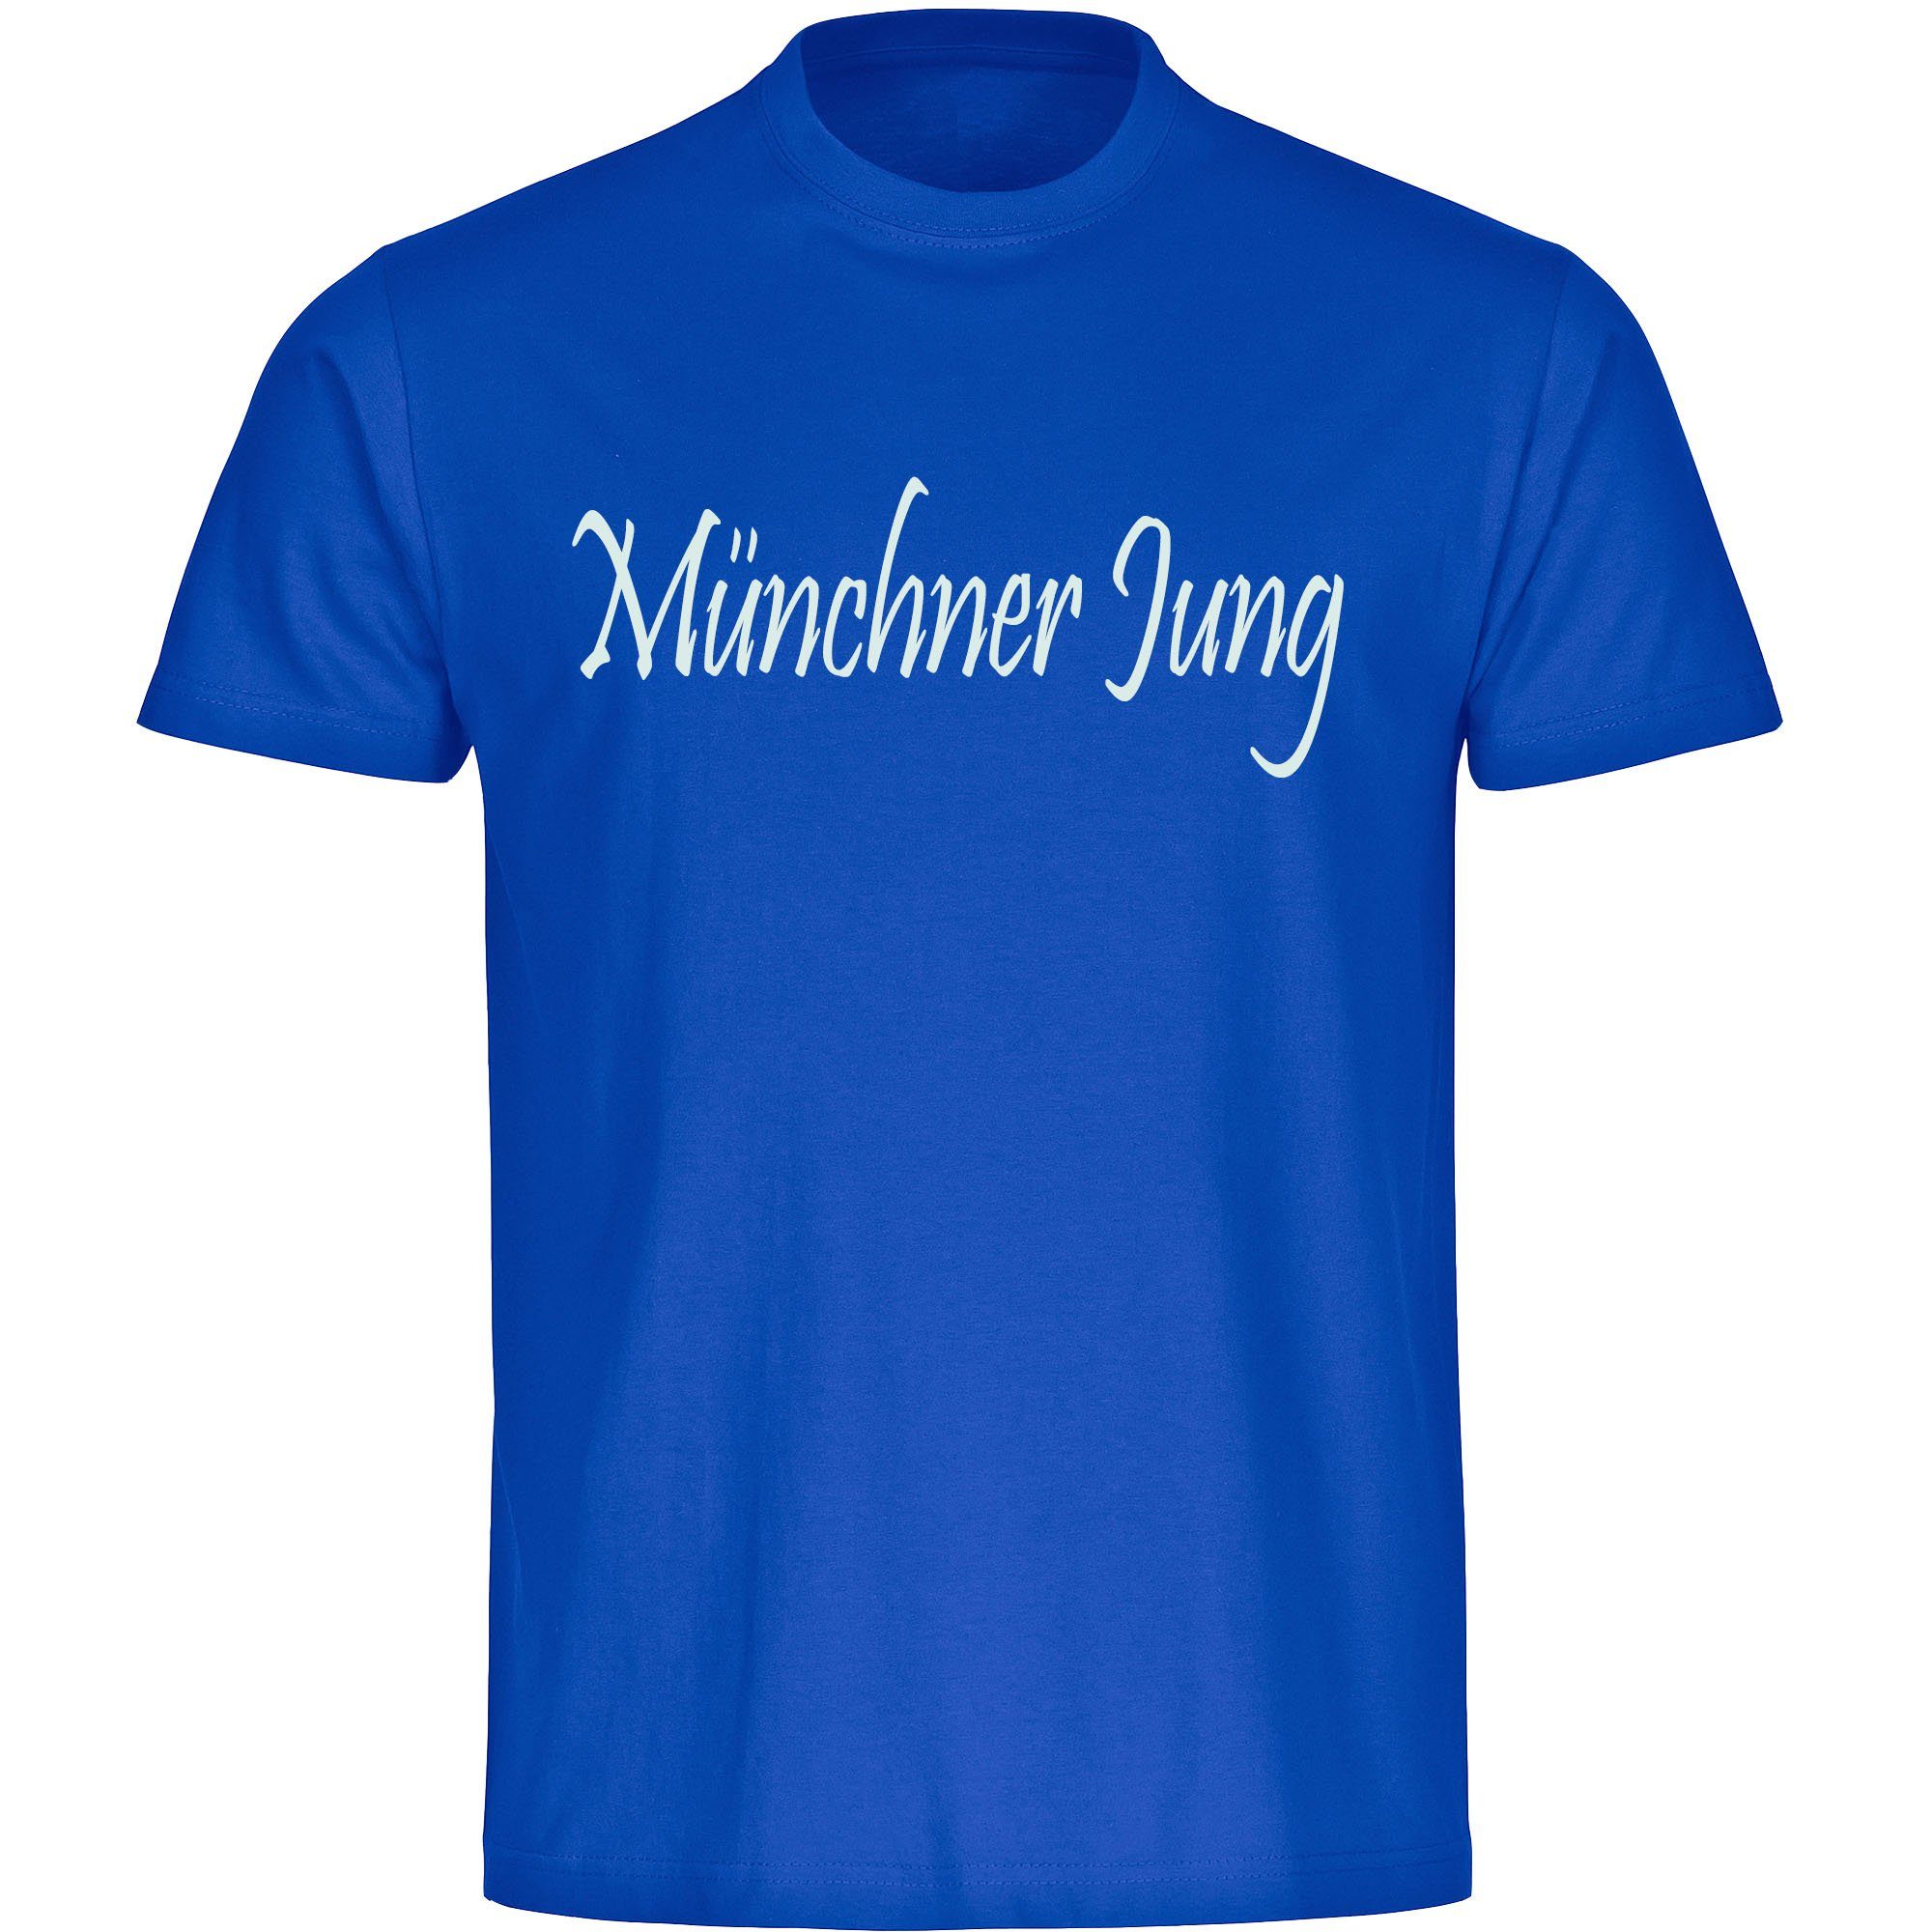 multifanshop T-Shirt Kinder München blau - Münchner Jung - Boy Girl